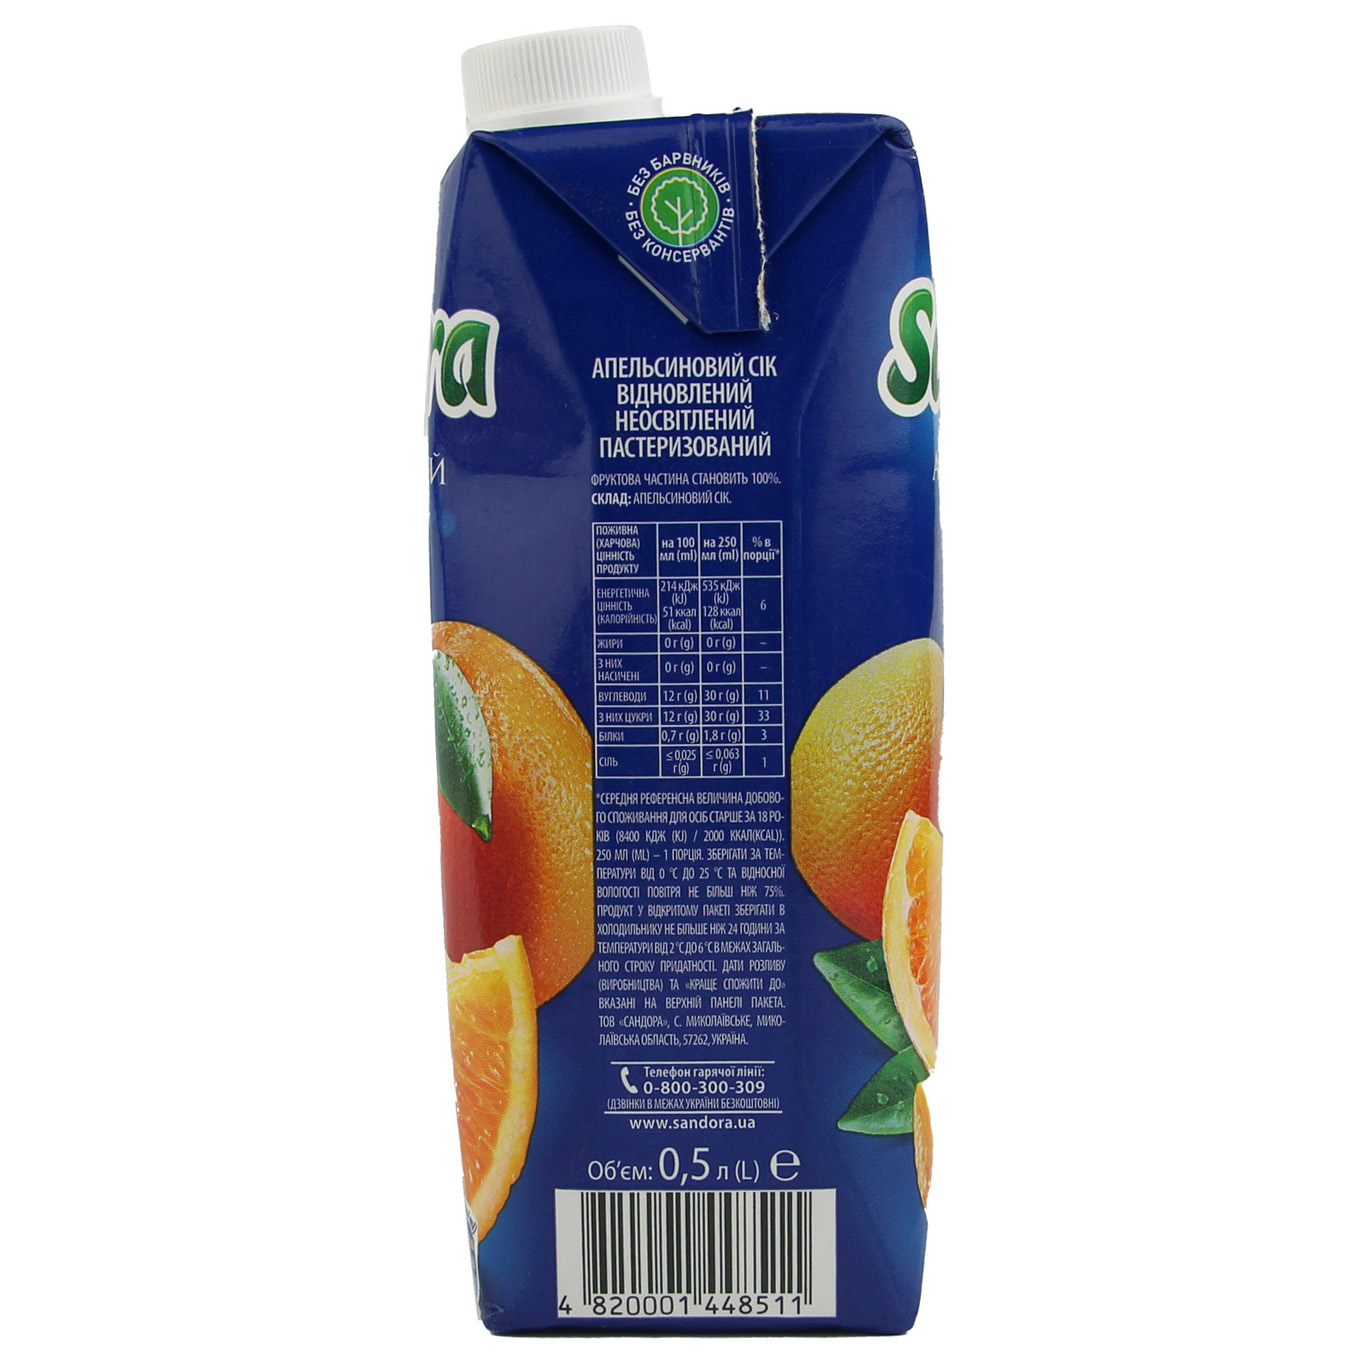 Sandora Orange juice 0,5l 2